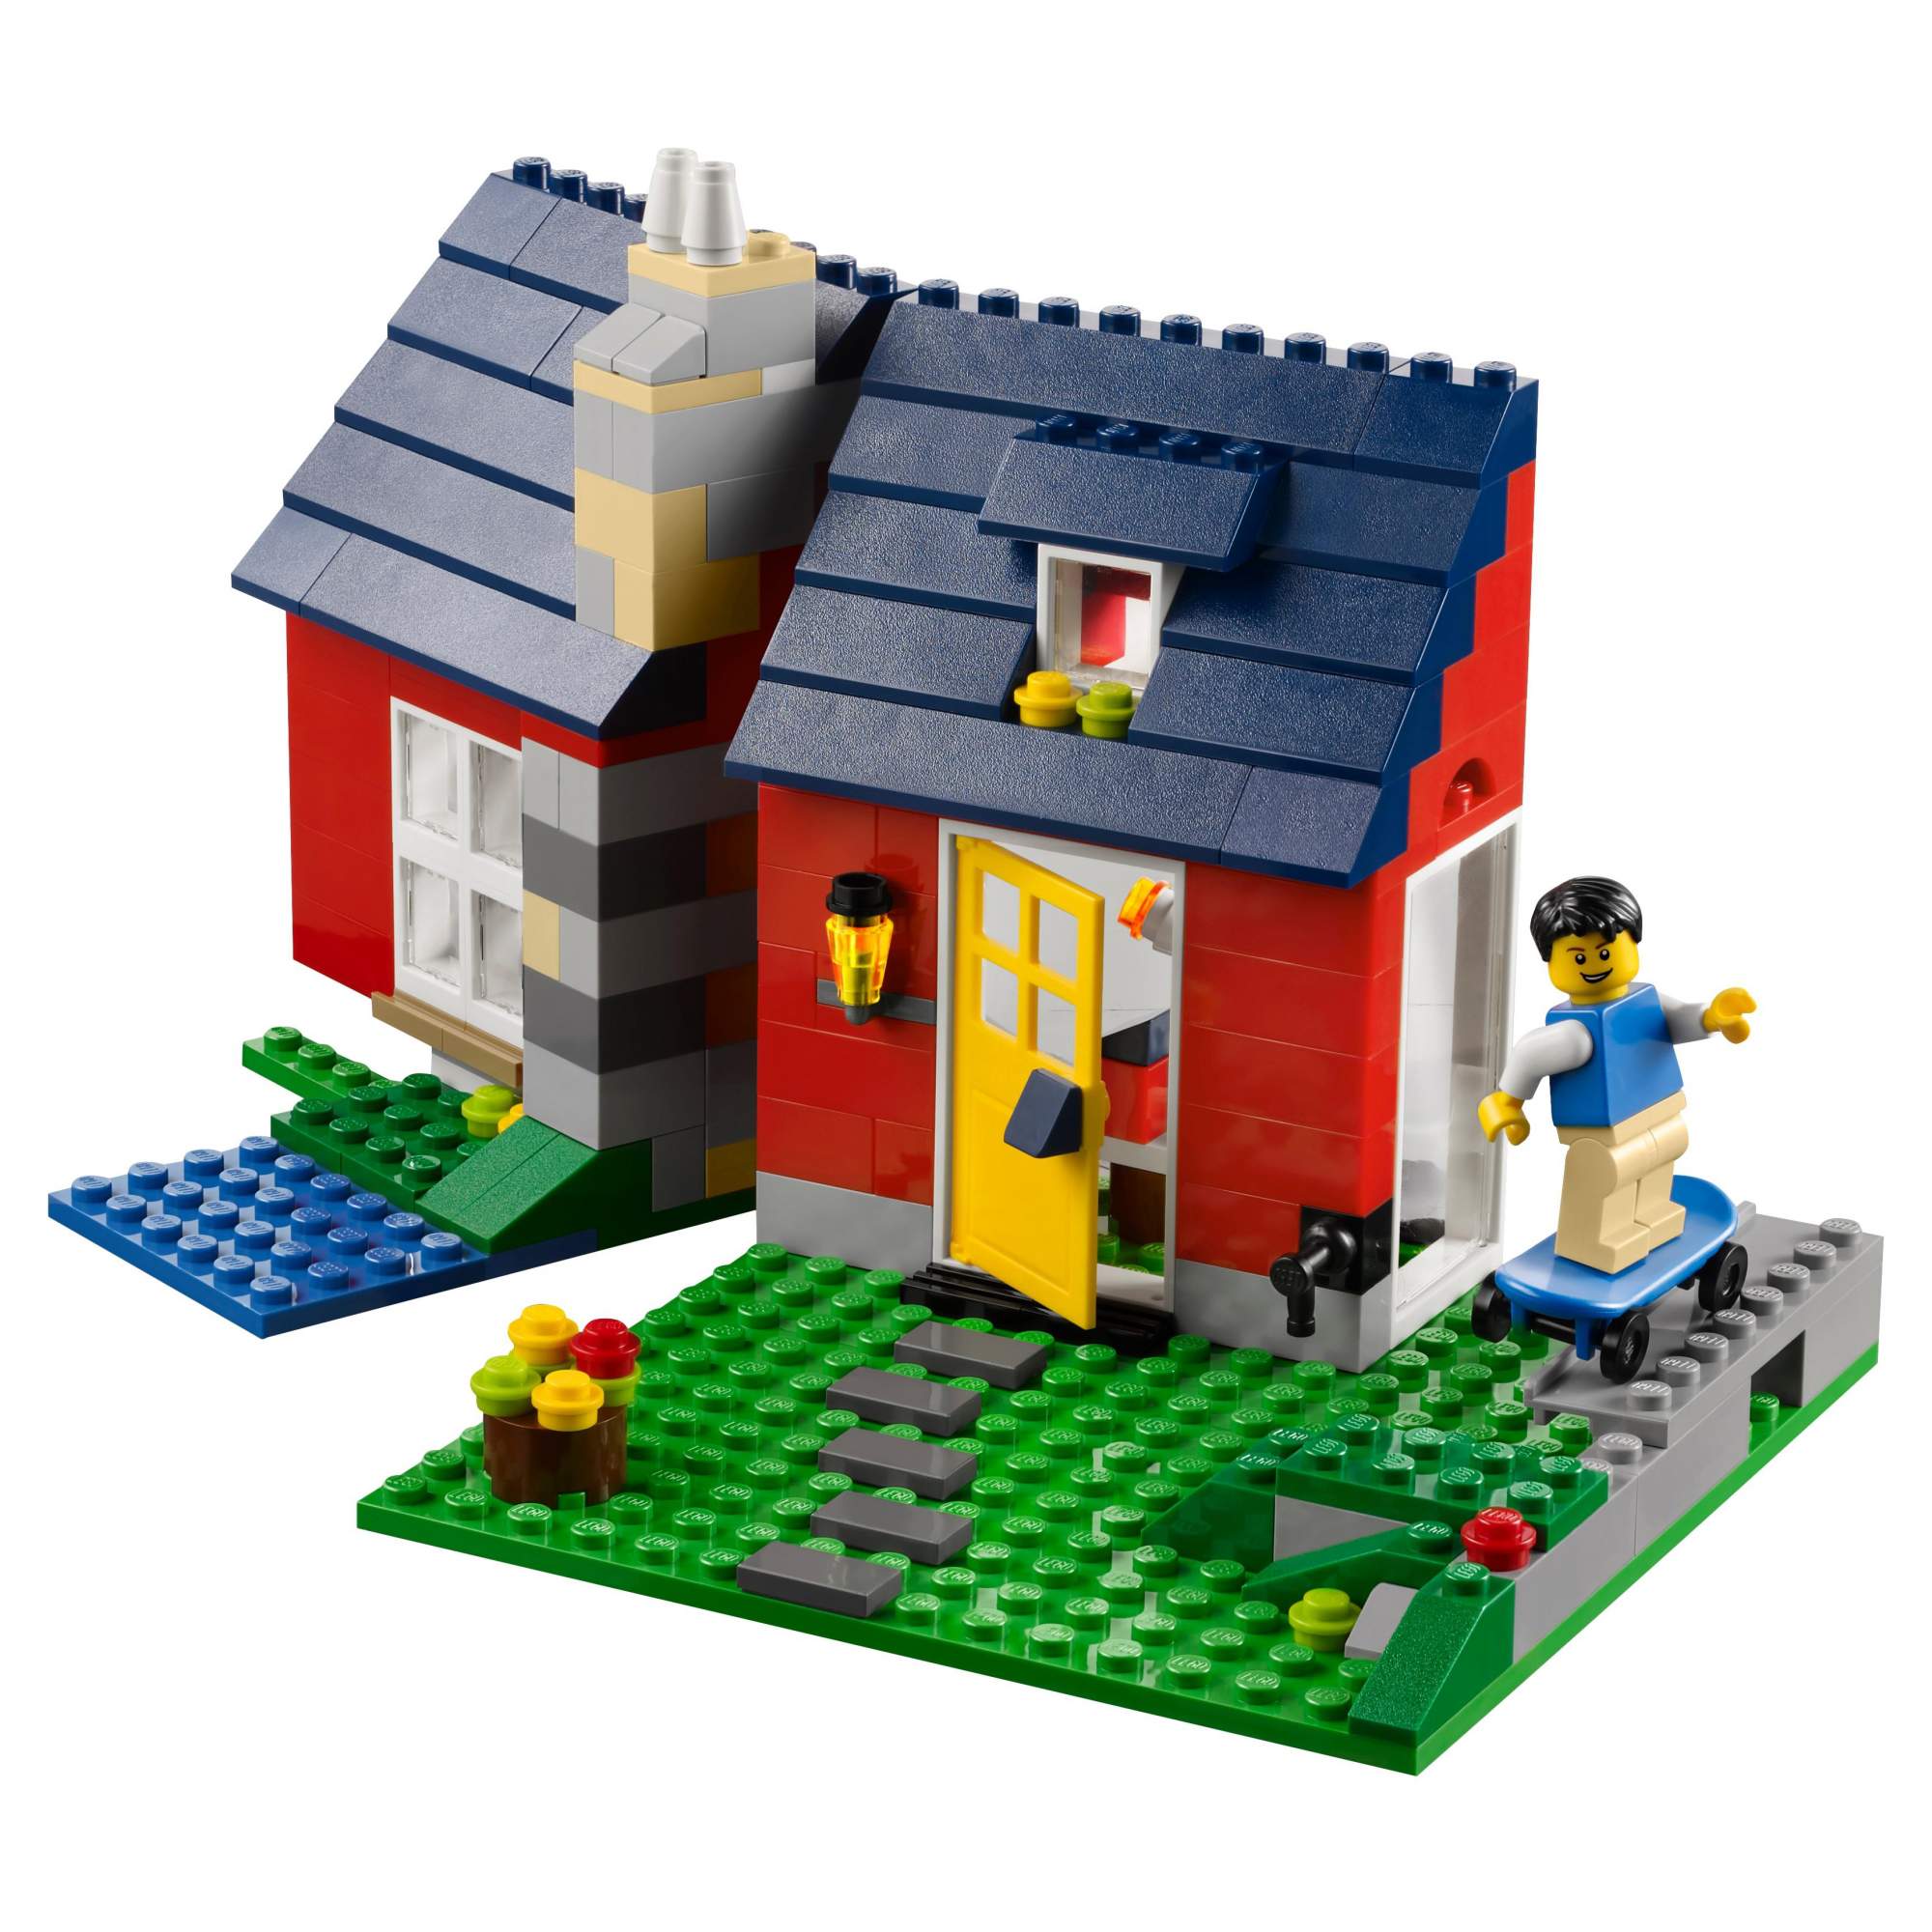 LEGO creator 31009